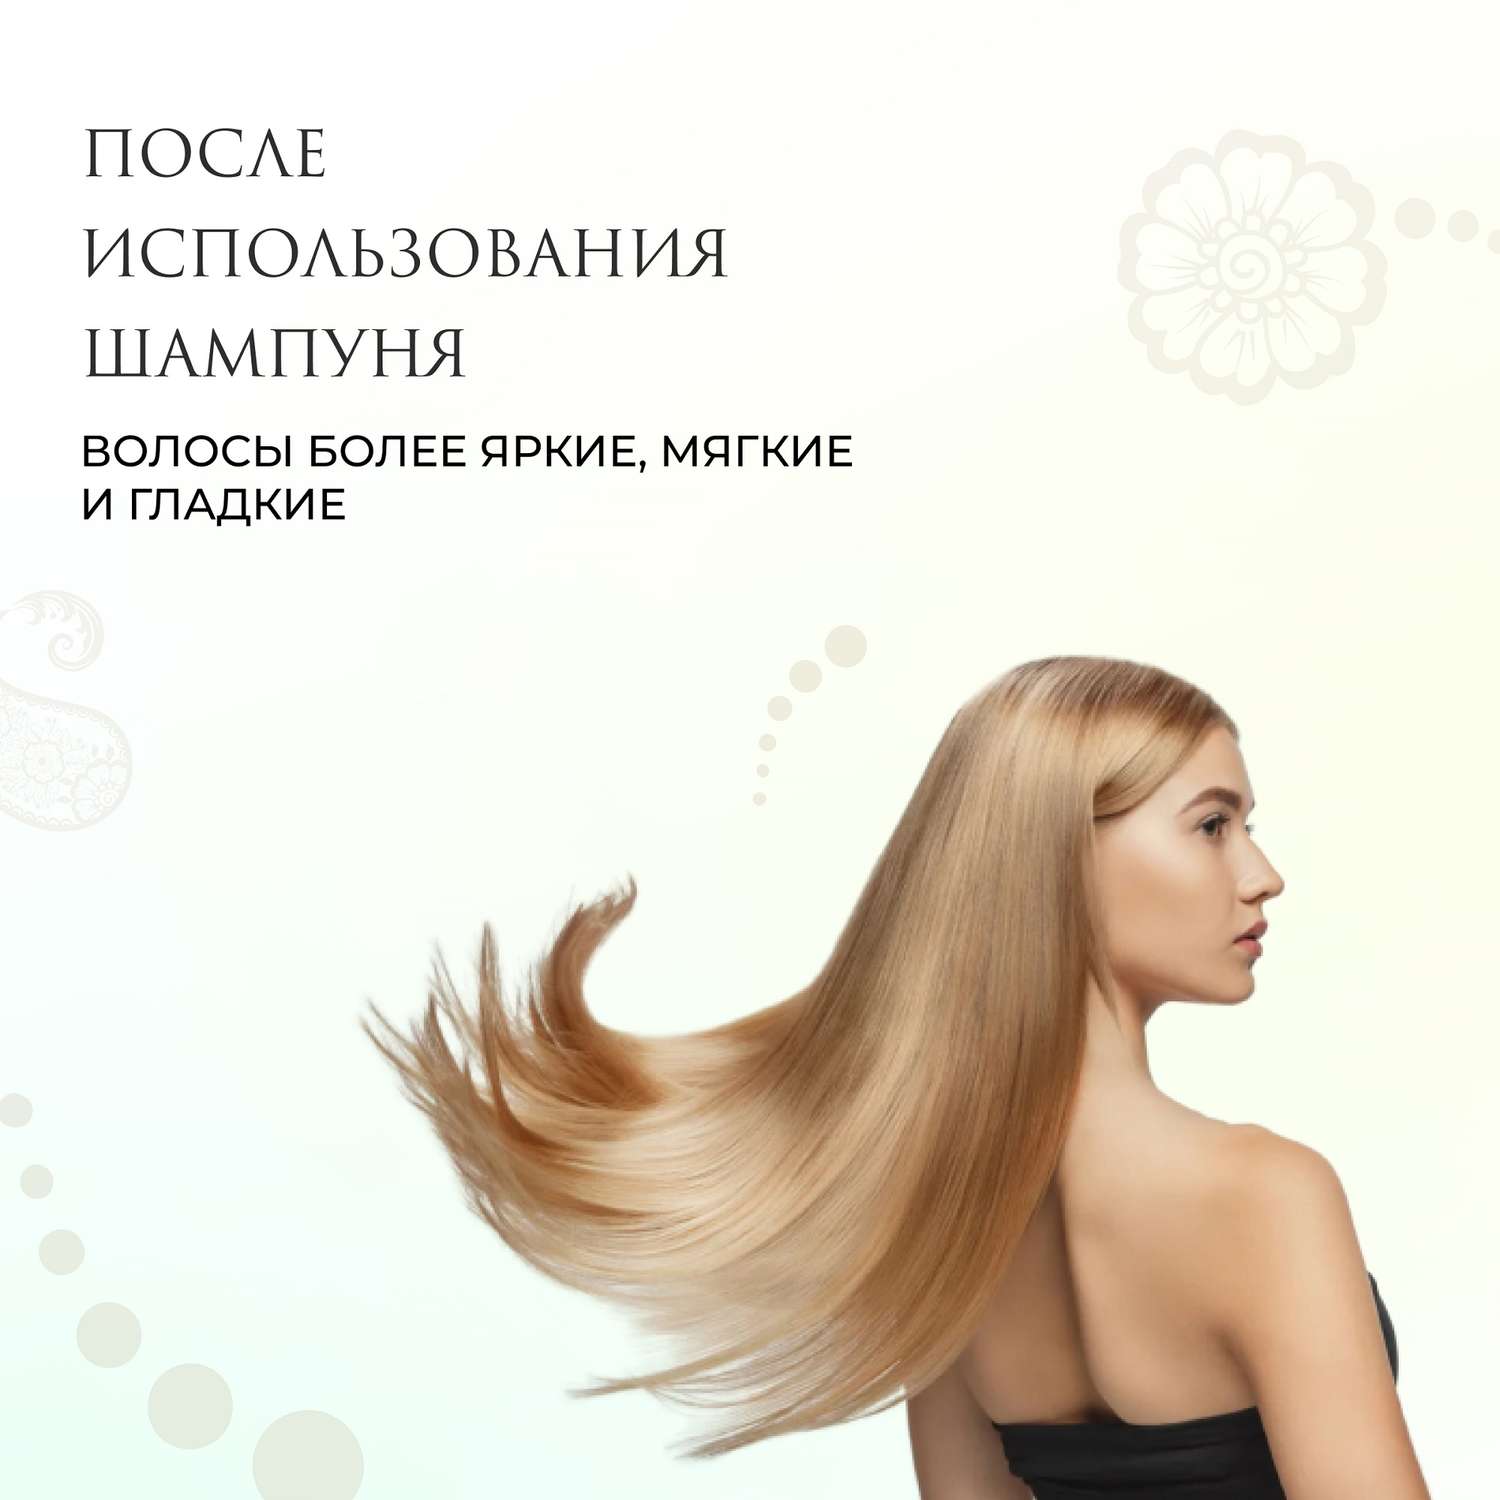 Шампунь для волос Liby увлажняющий акадамии 500 мл - фото 4